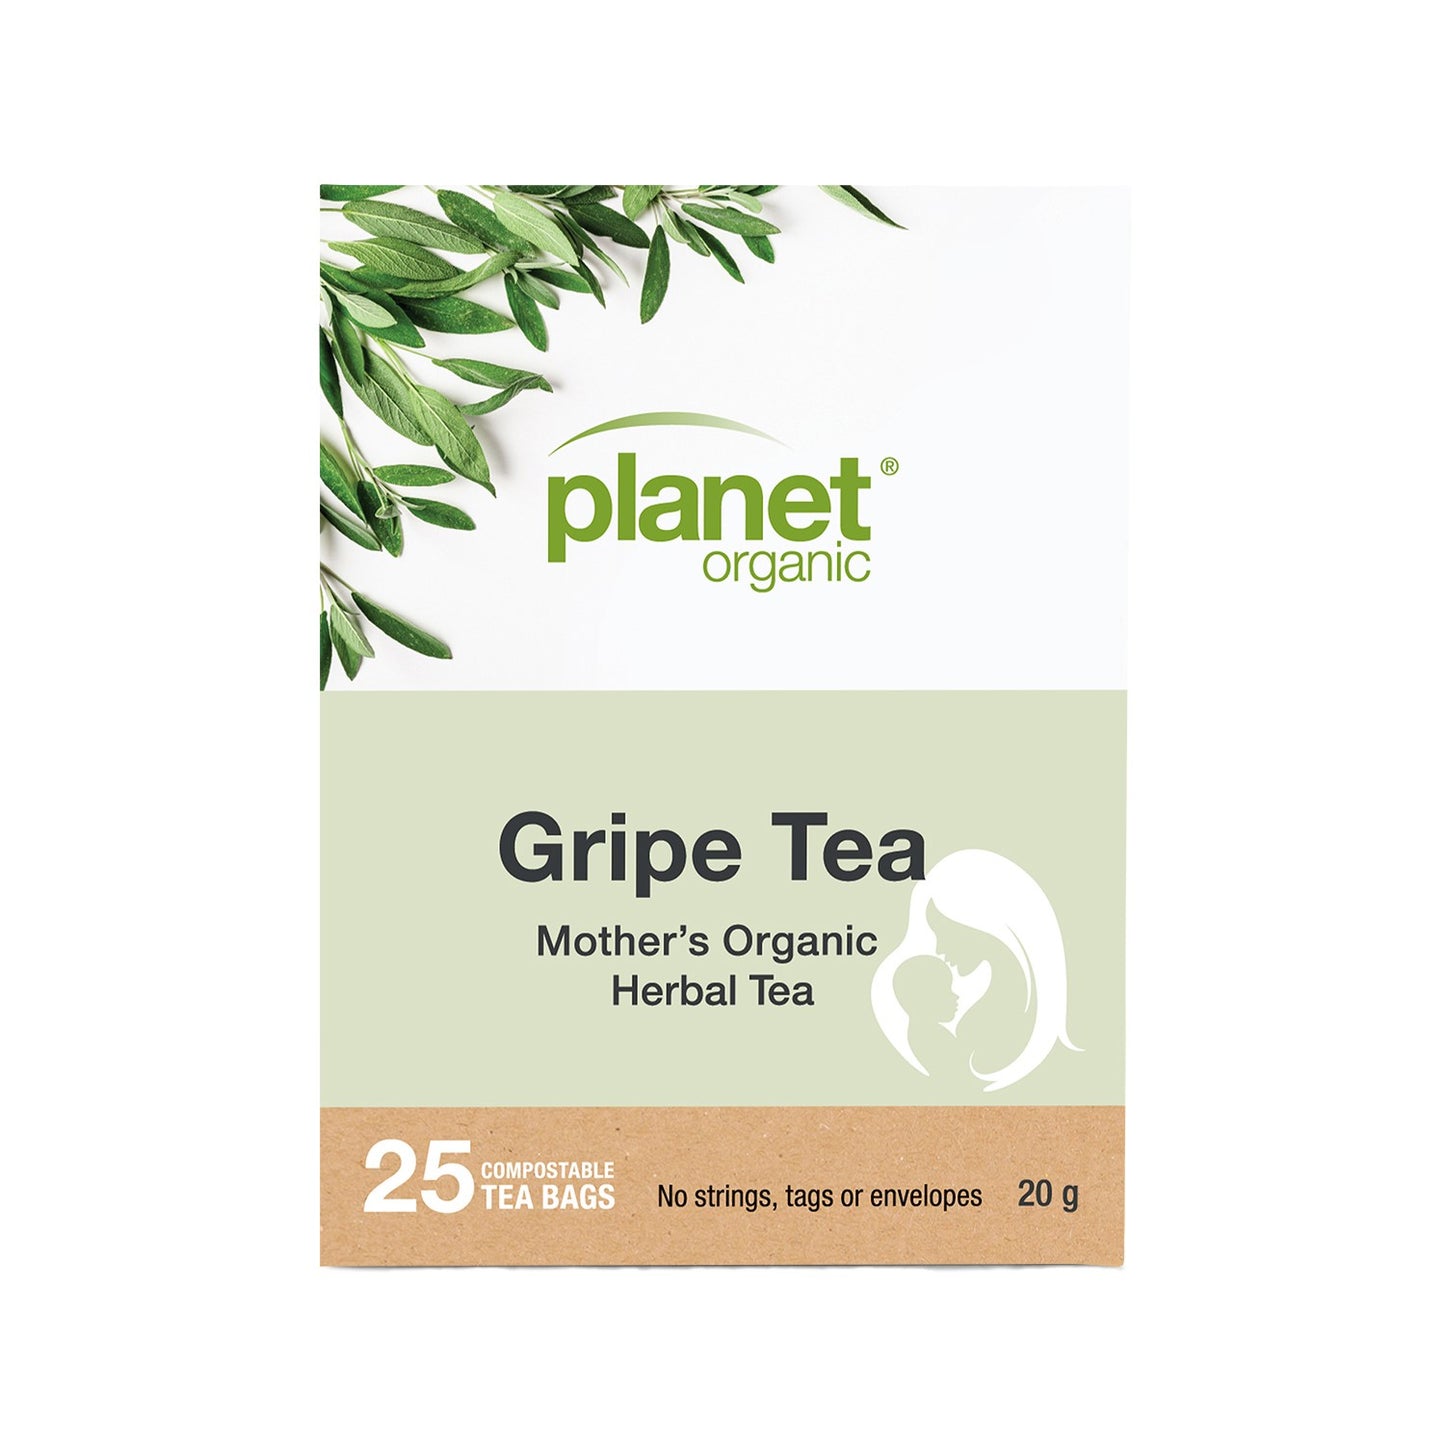 Gripe Herbal Tea (formerly Colic Tea) - 25 bag